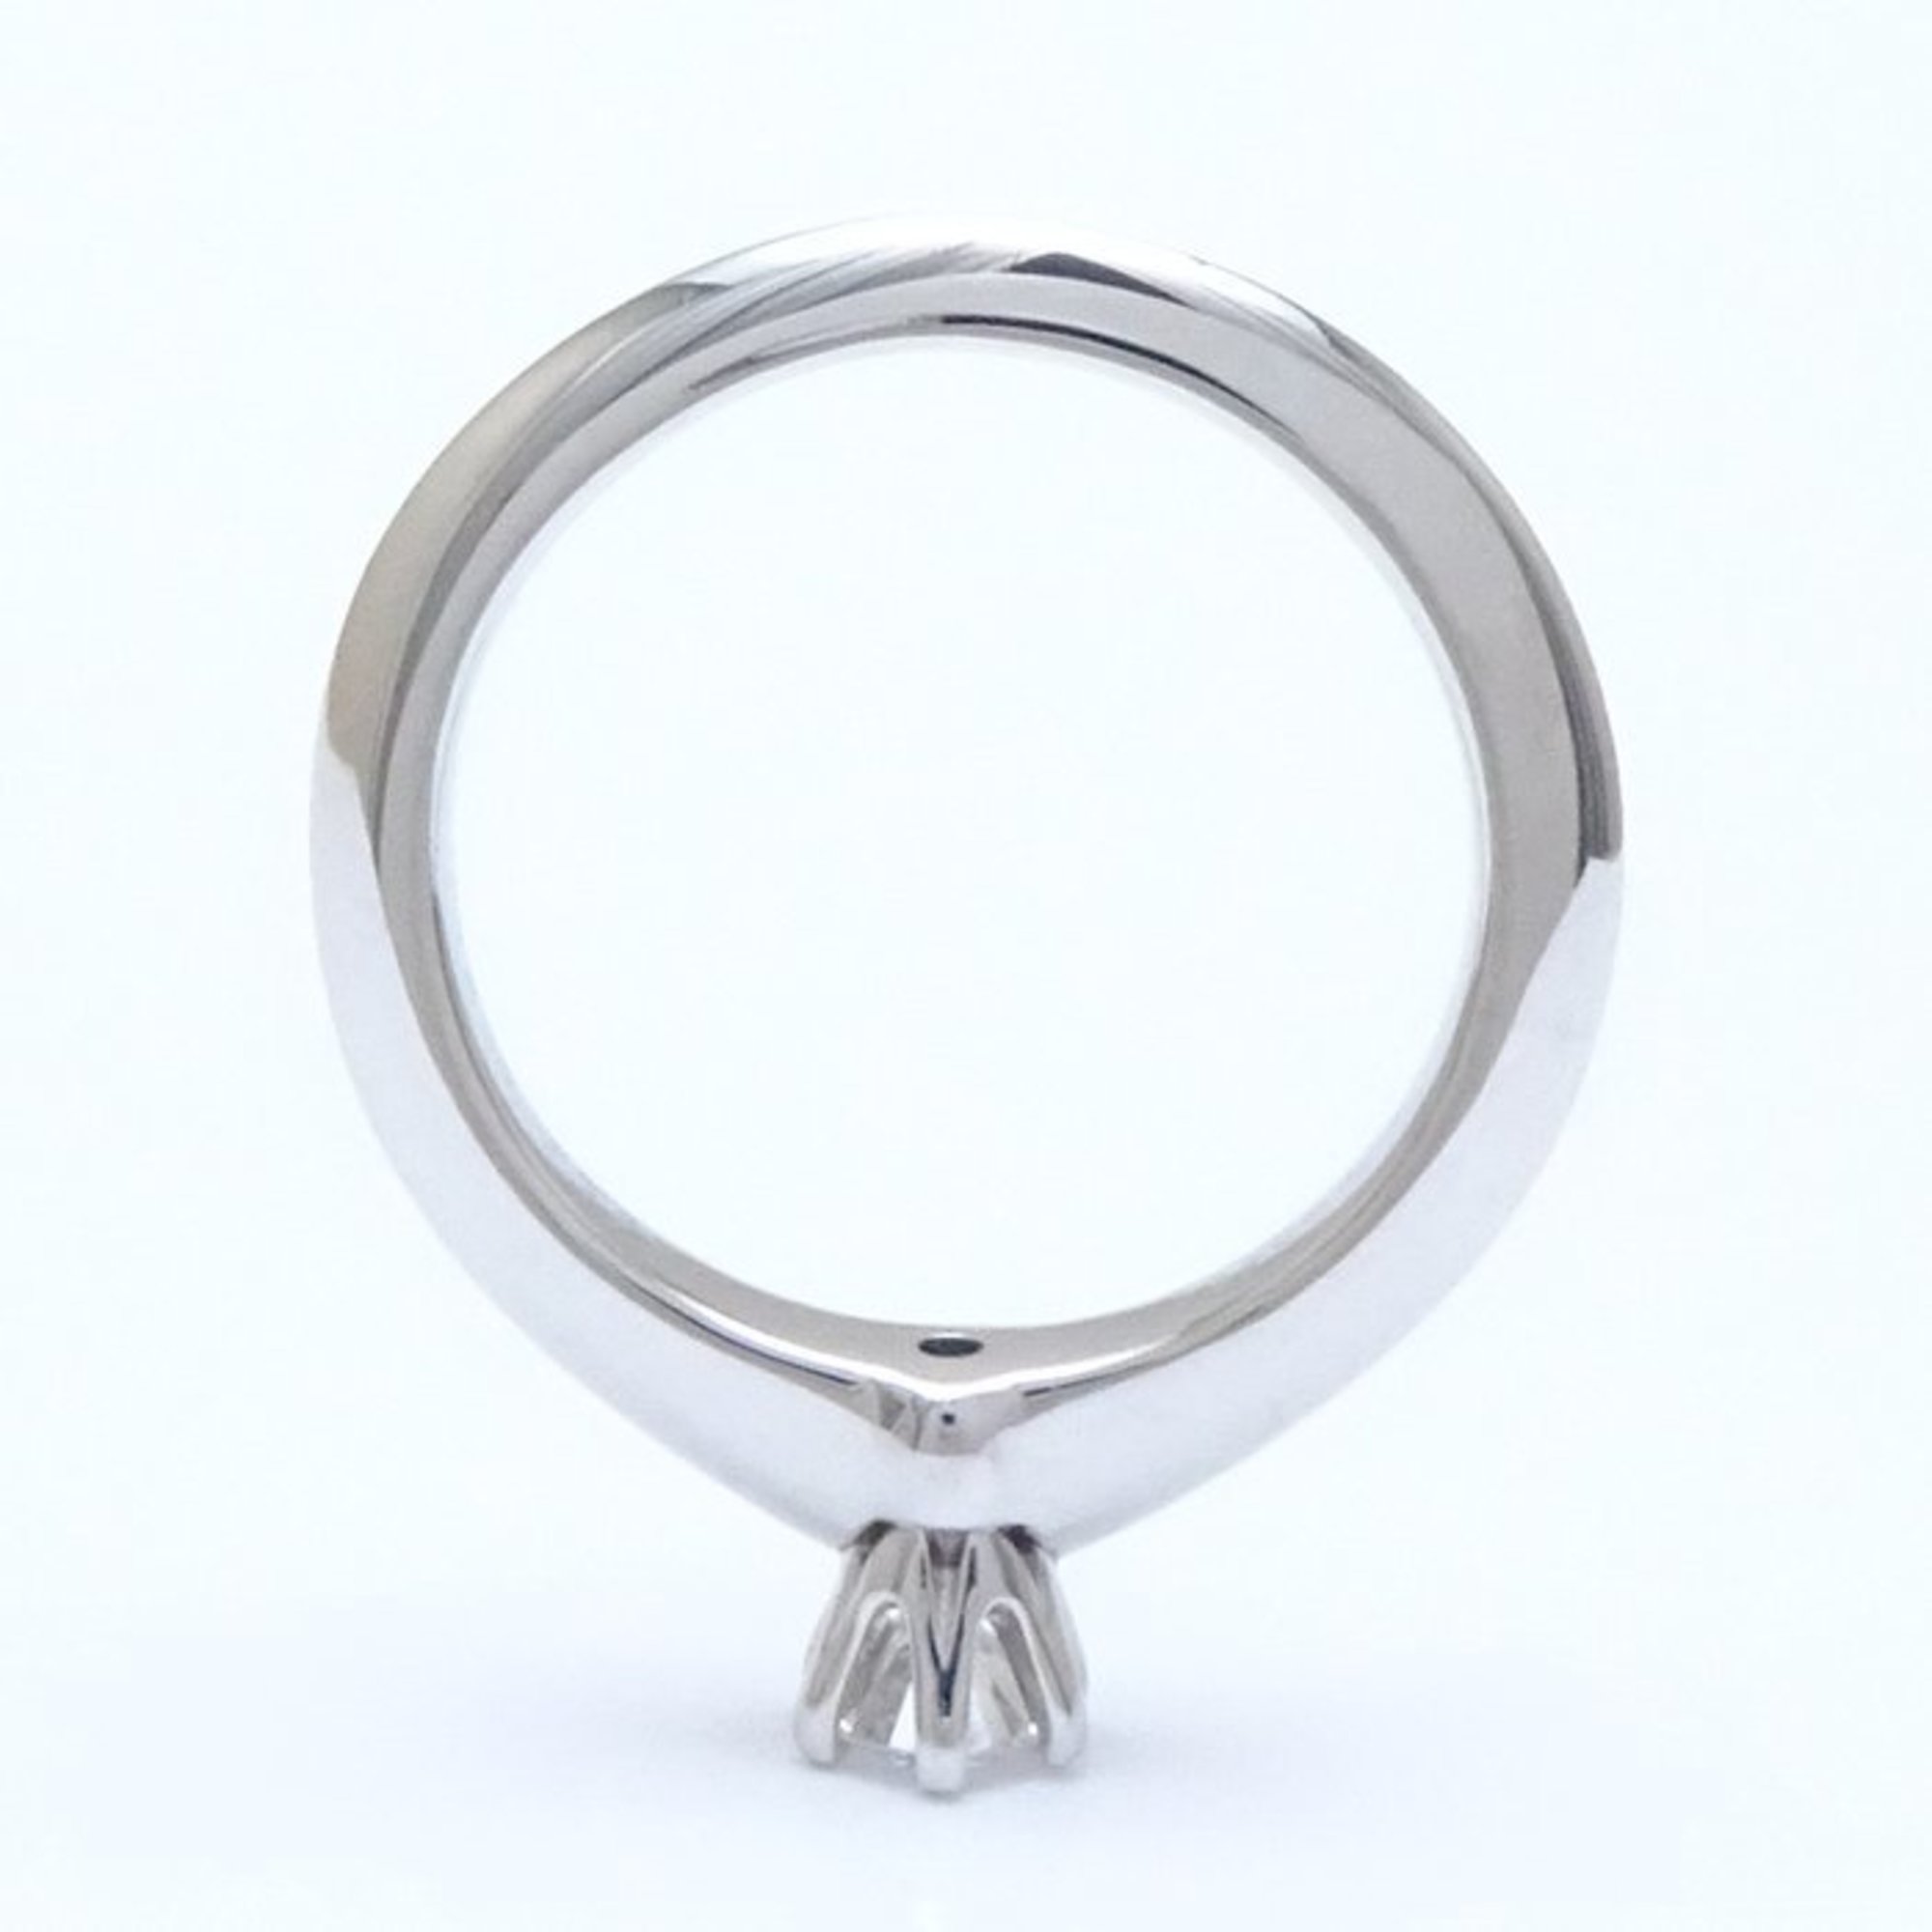 TIFFANY&Co. Tiffany Solitaire Ring, Single Diamond 0.19ct D.VVS2.3Excellent, Pt950 Platinum 291977